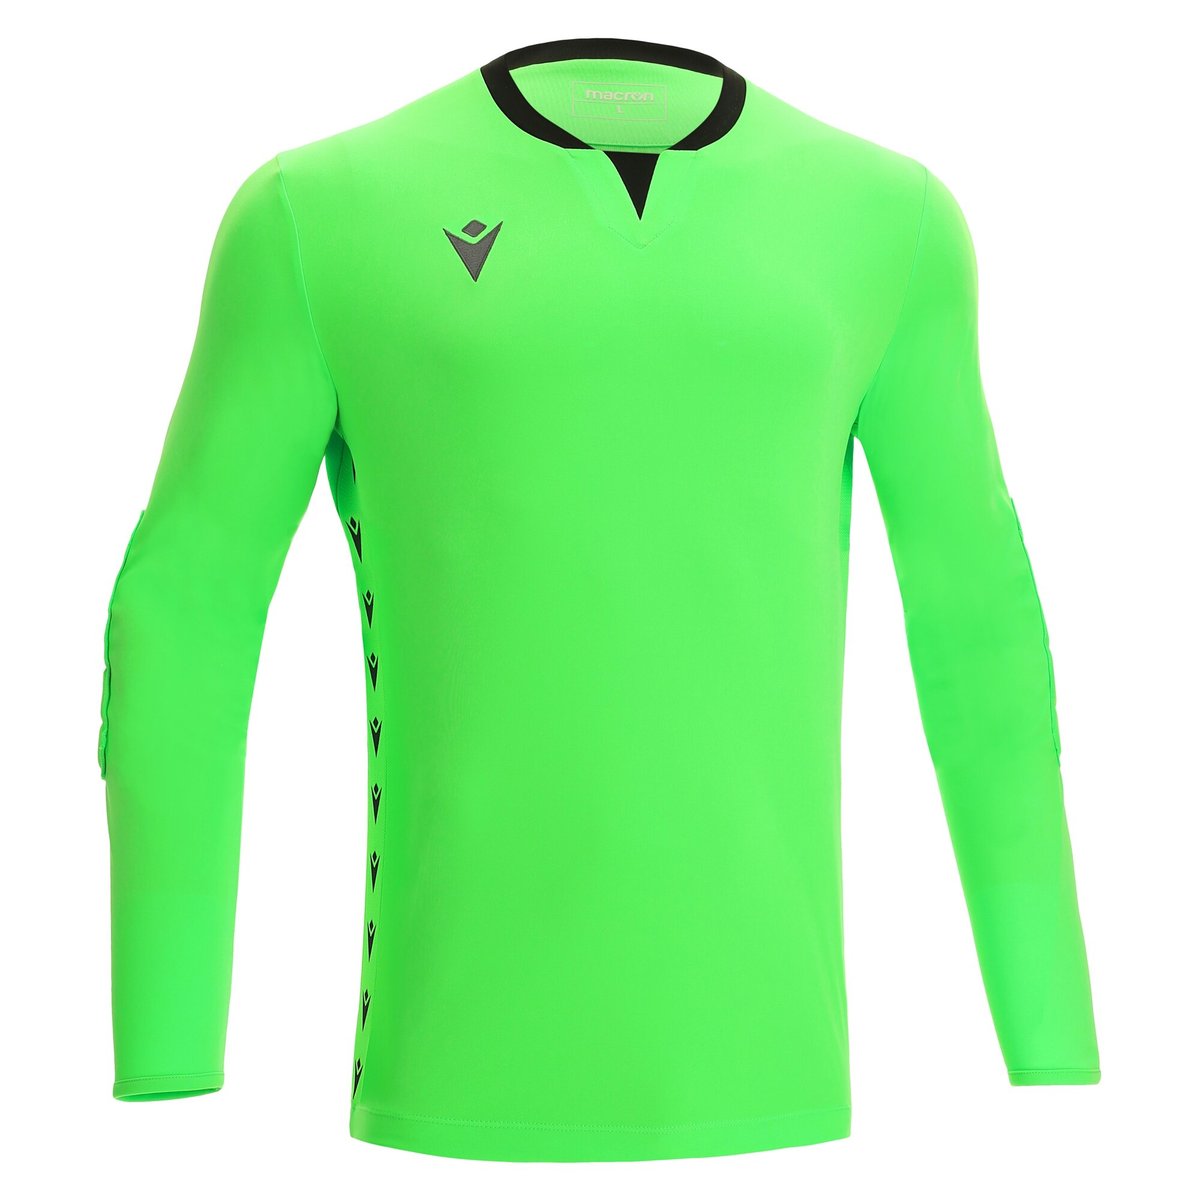 Macron Eridanus GK Shirt - Neon Green/Black